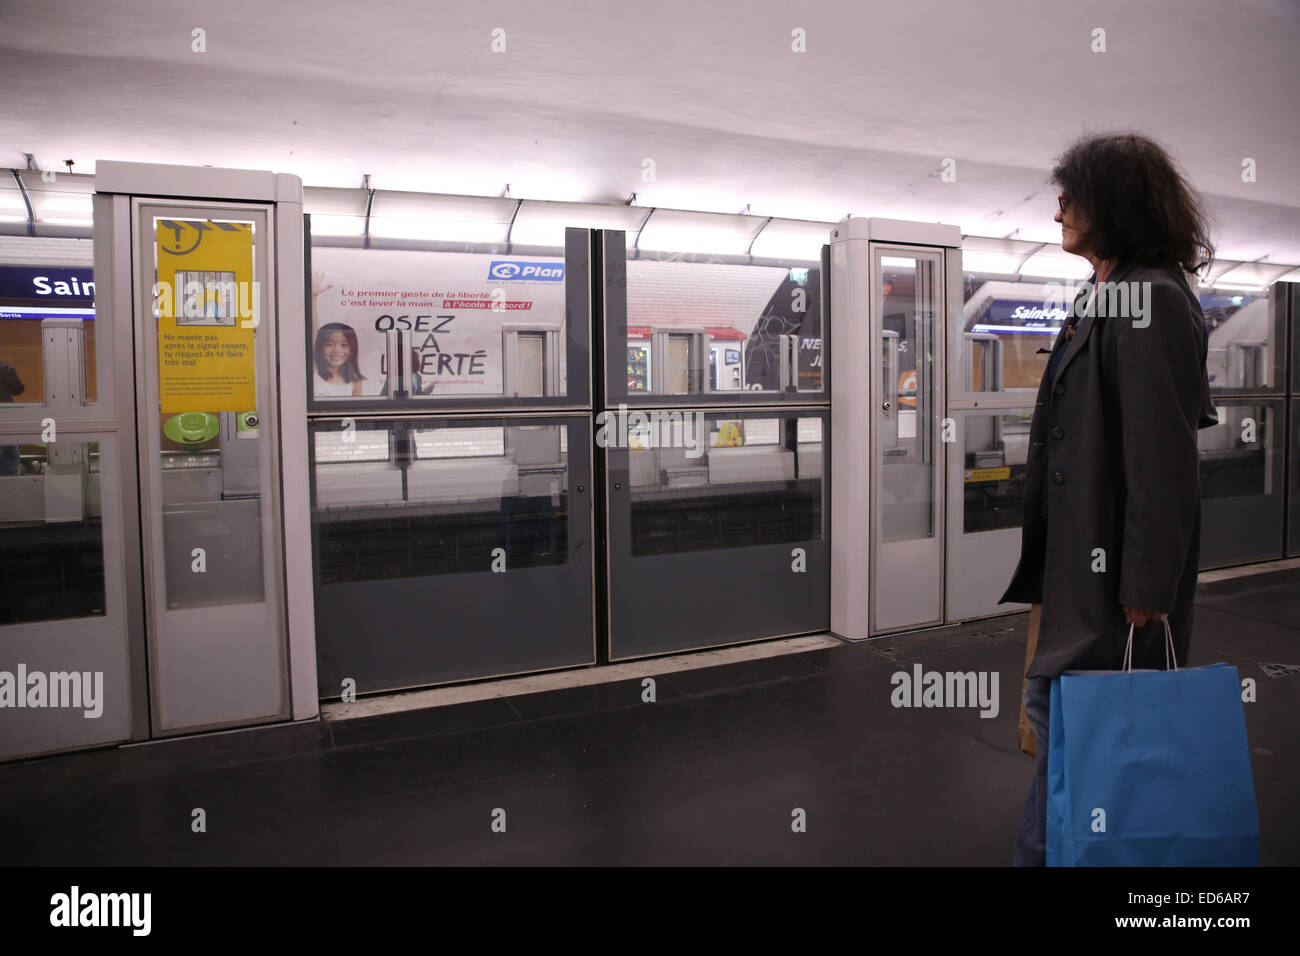 La donna in attesa del treno della metropolitana di Parigi platform Foto Stock